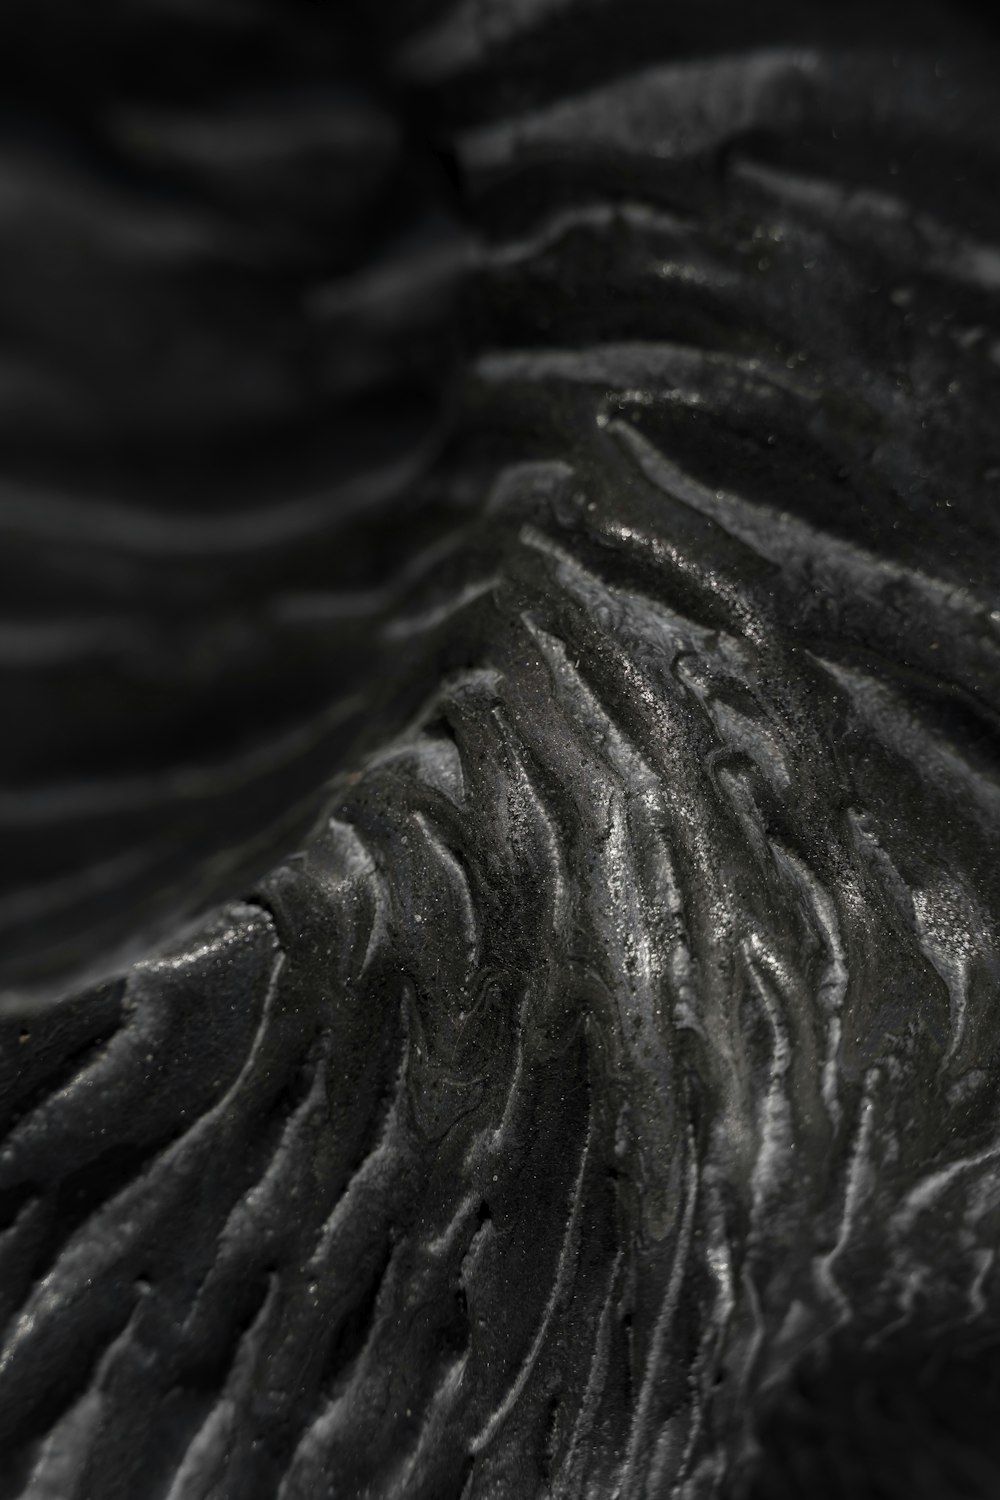 a close up of a black elephant's skin